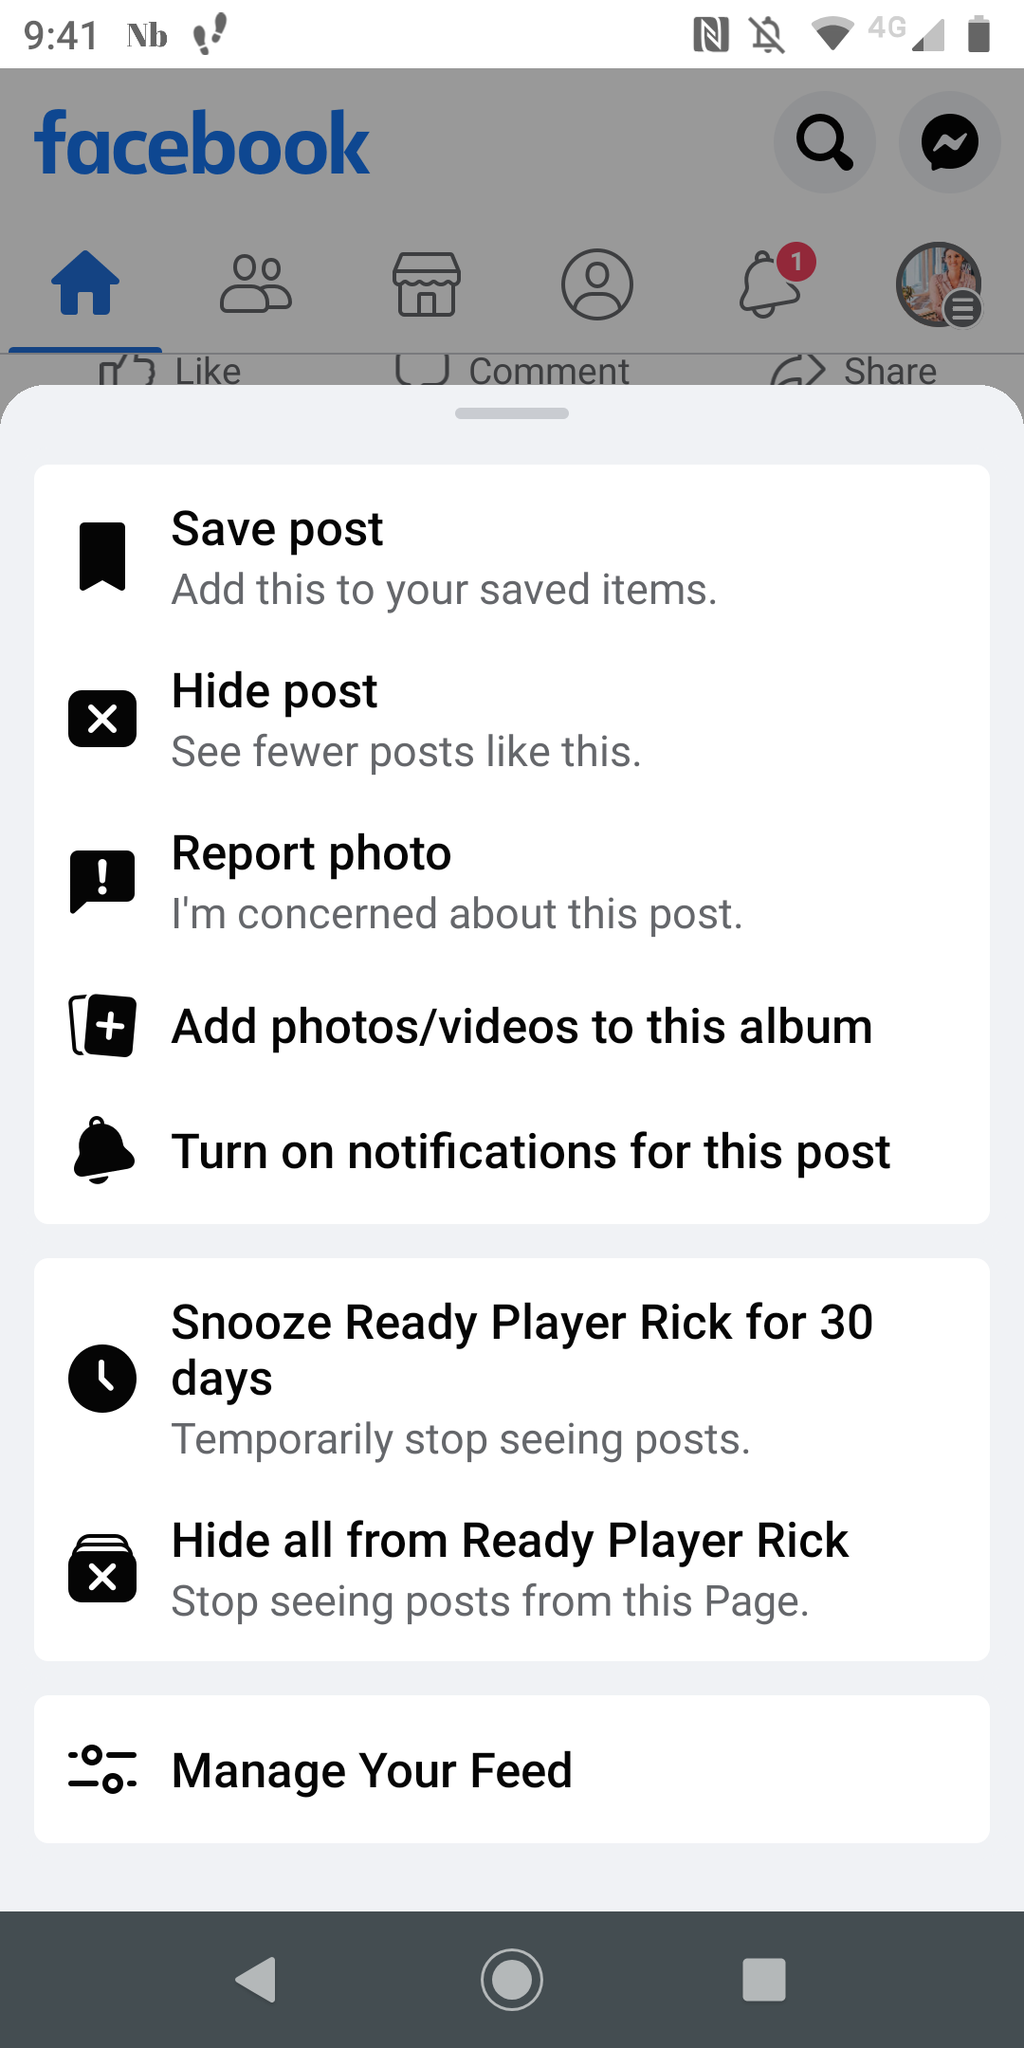 Facebook settings home screen